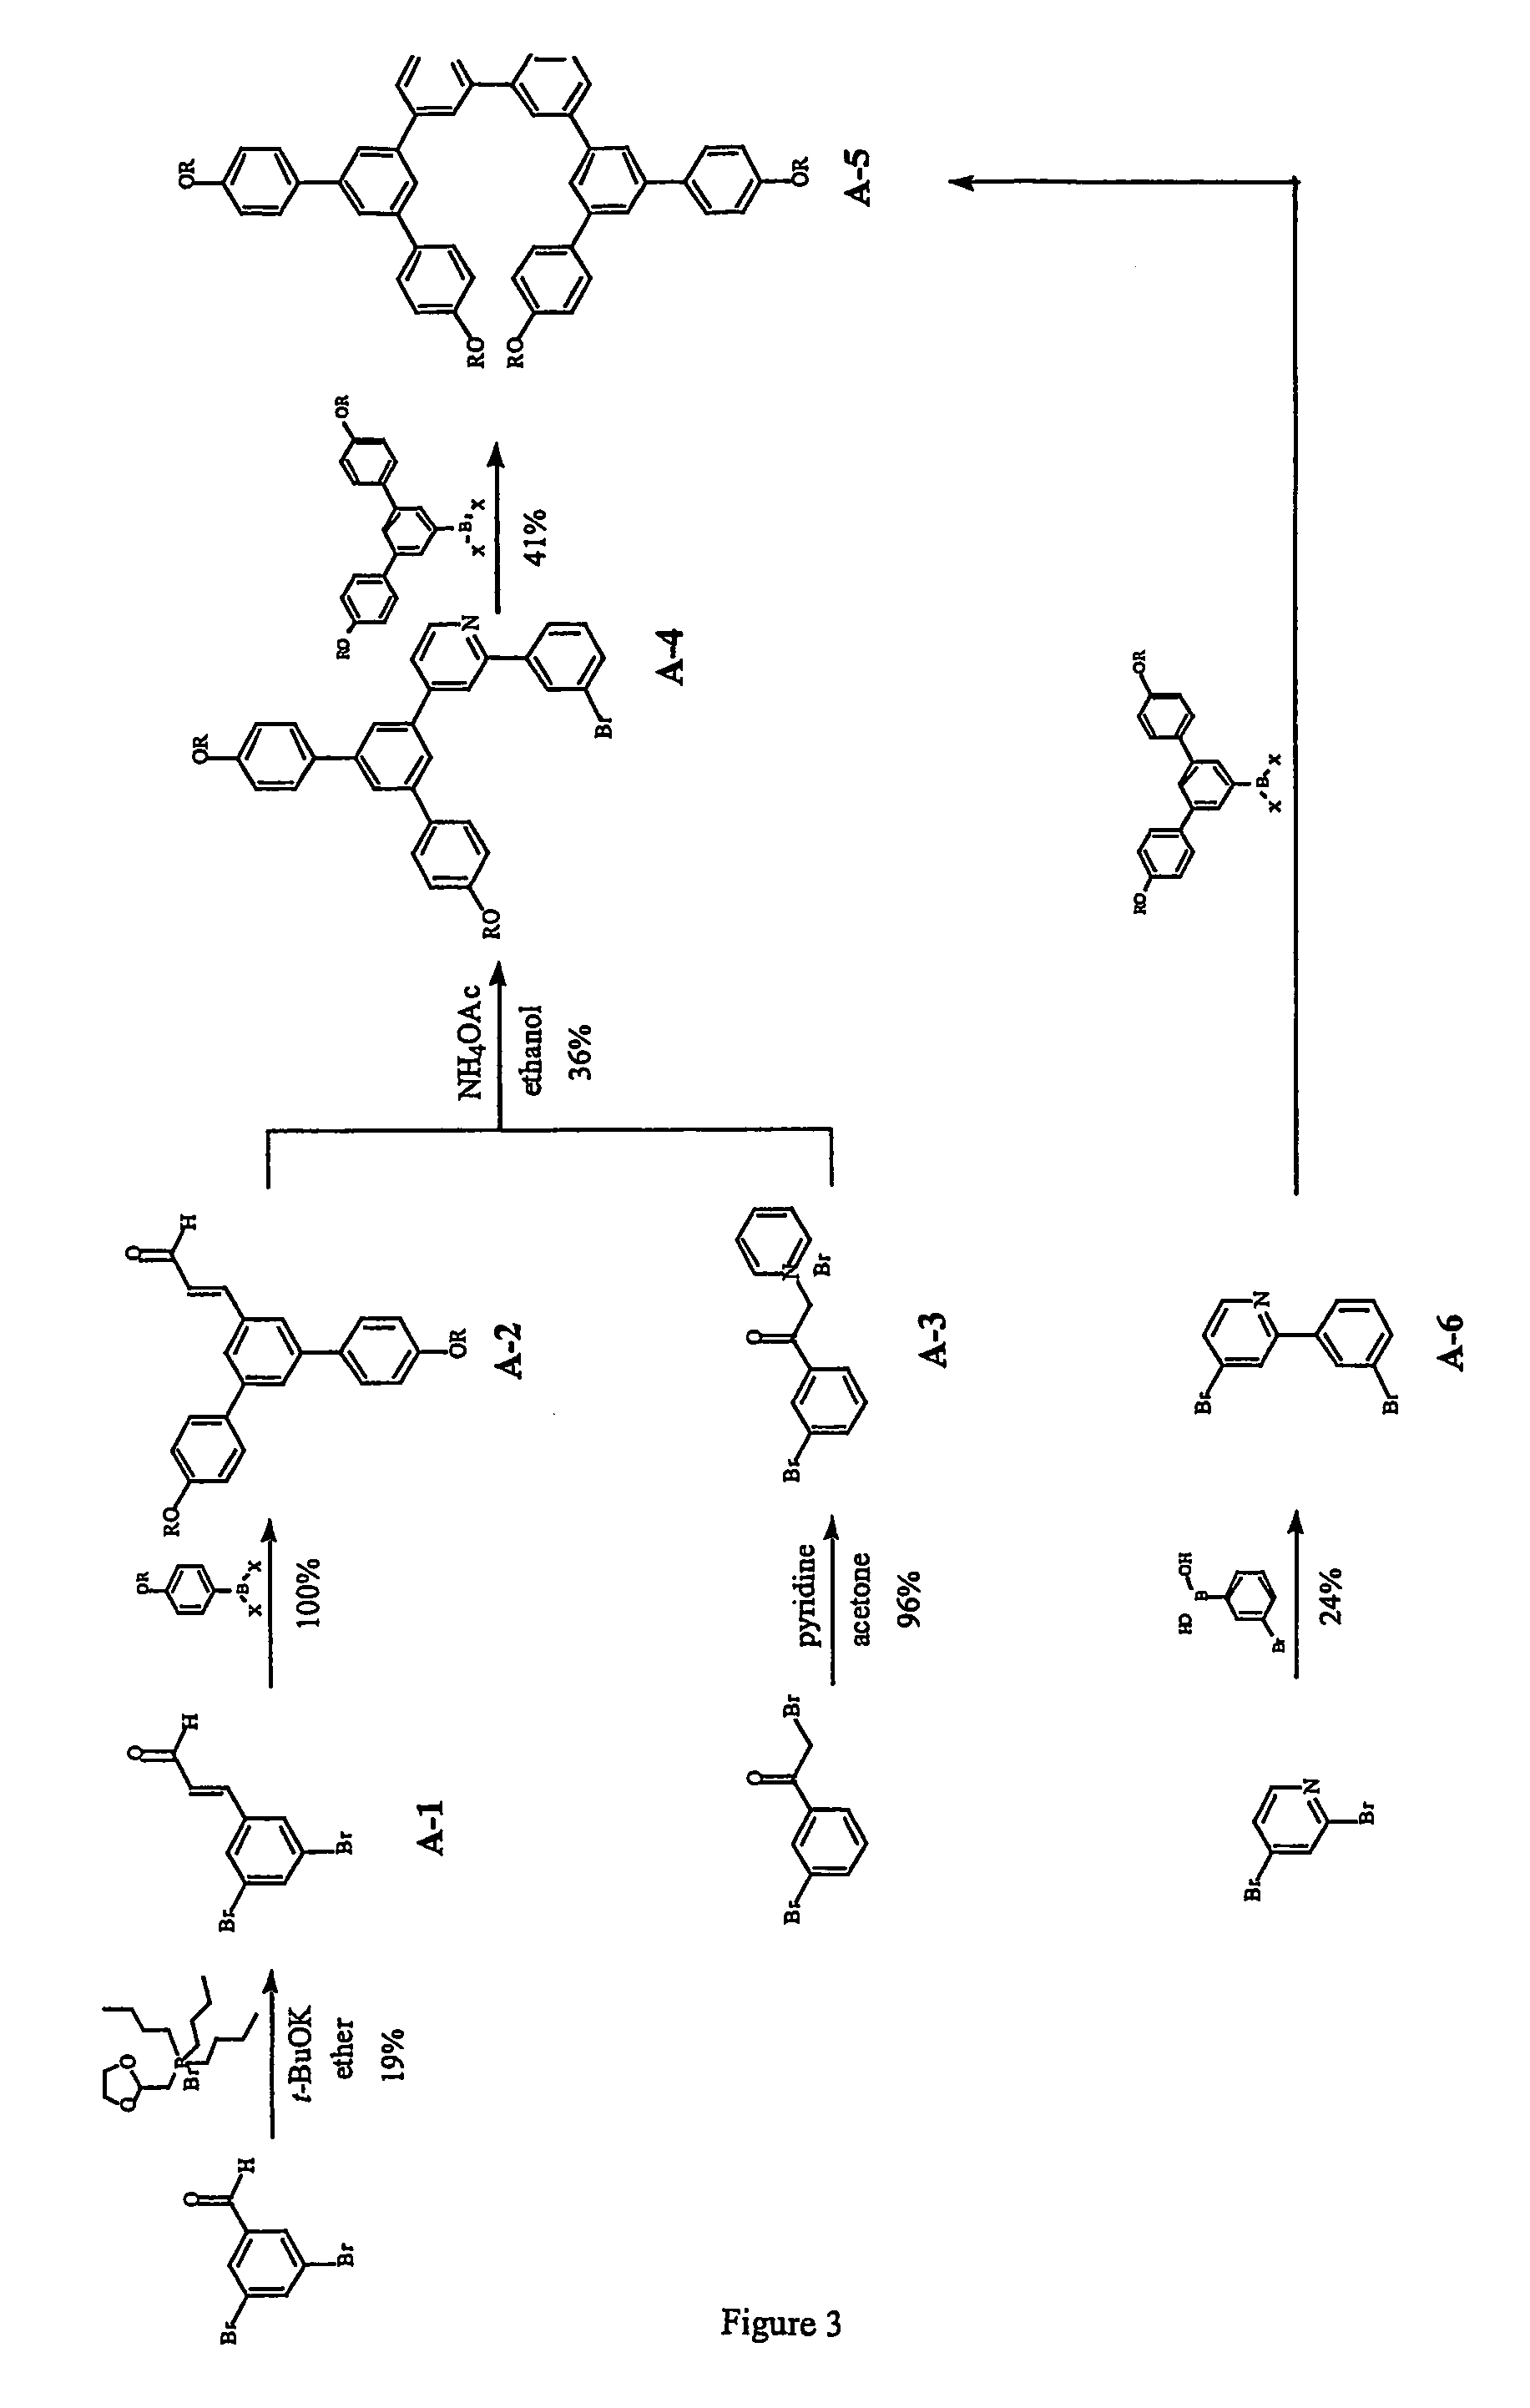 Neutral metallic dendrimer complexes